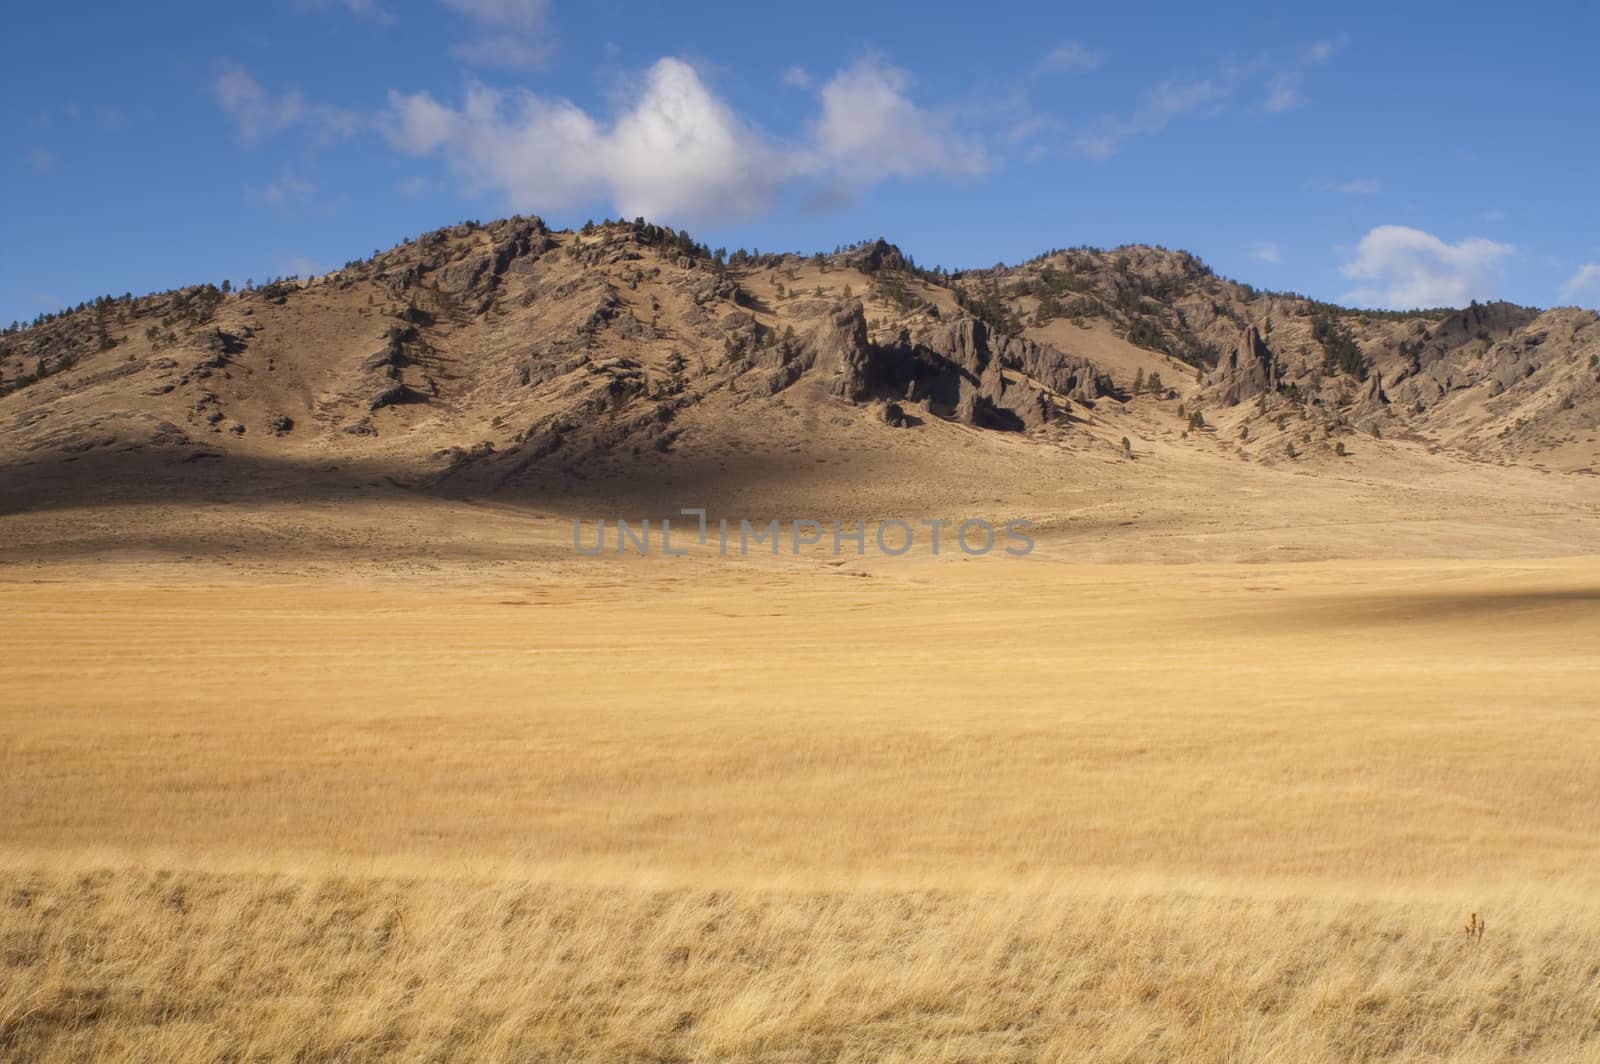 Beautiful Landscape Western United States Idaho Grass Land by ChrisBoswell